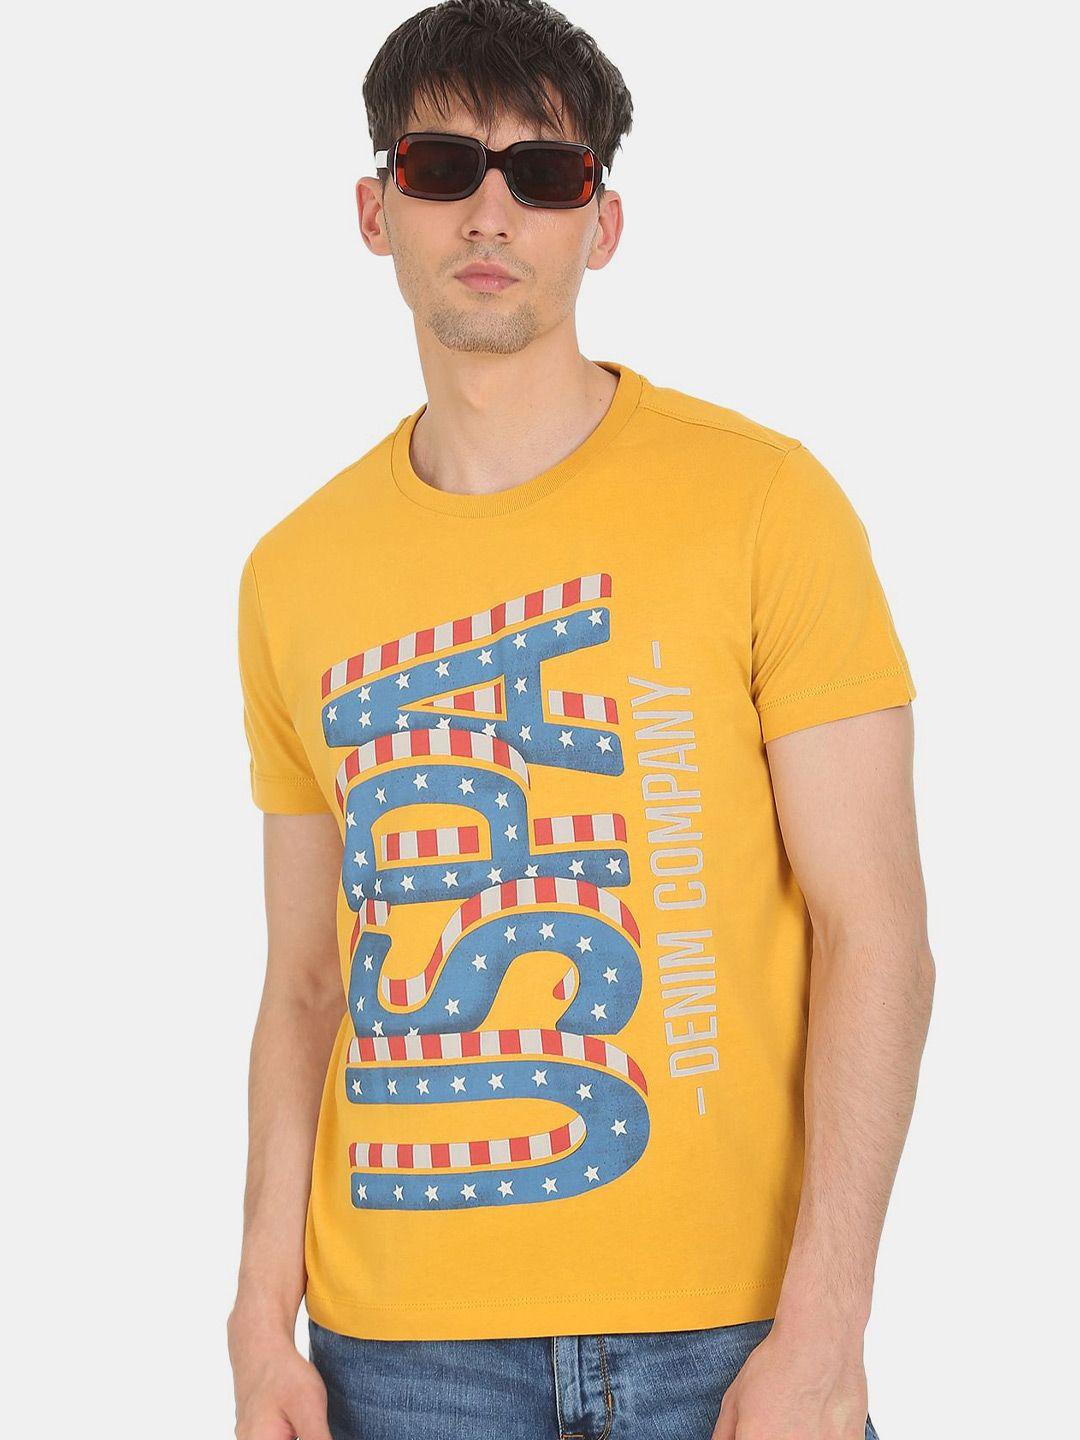 U S Polo Assn Denim Co Men Mustard Yellow Typography Printed Cotton T-shirt